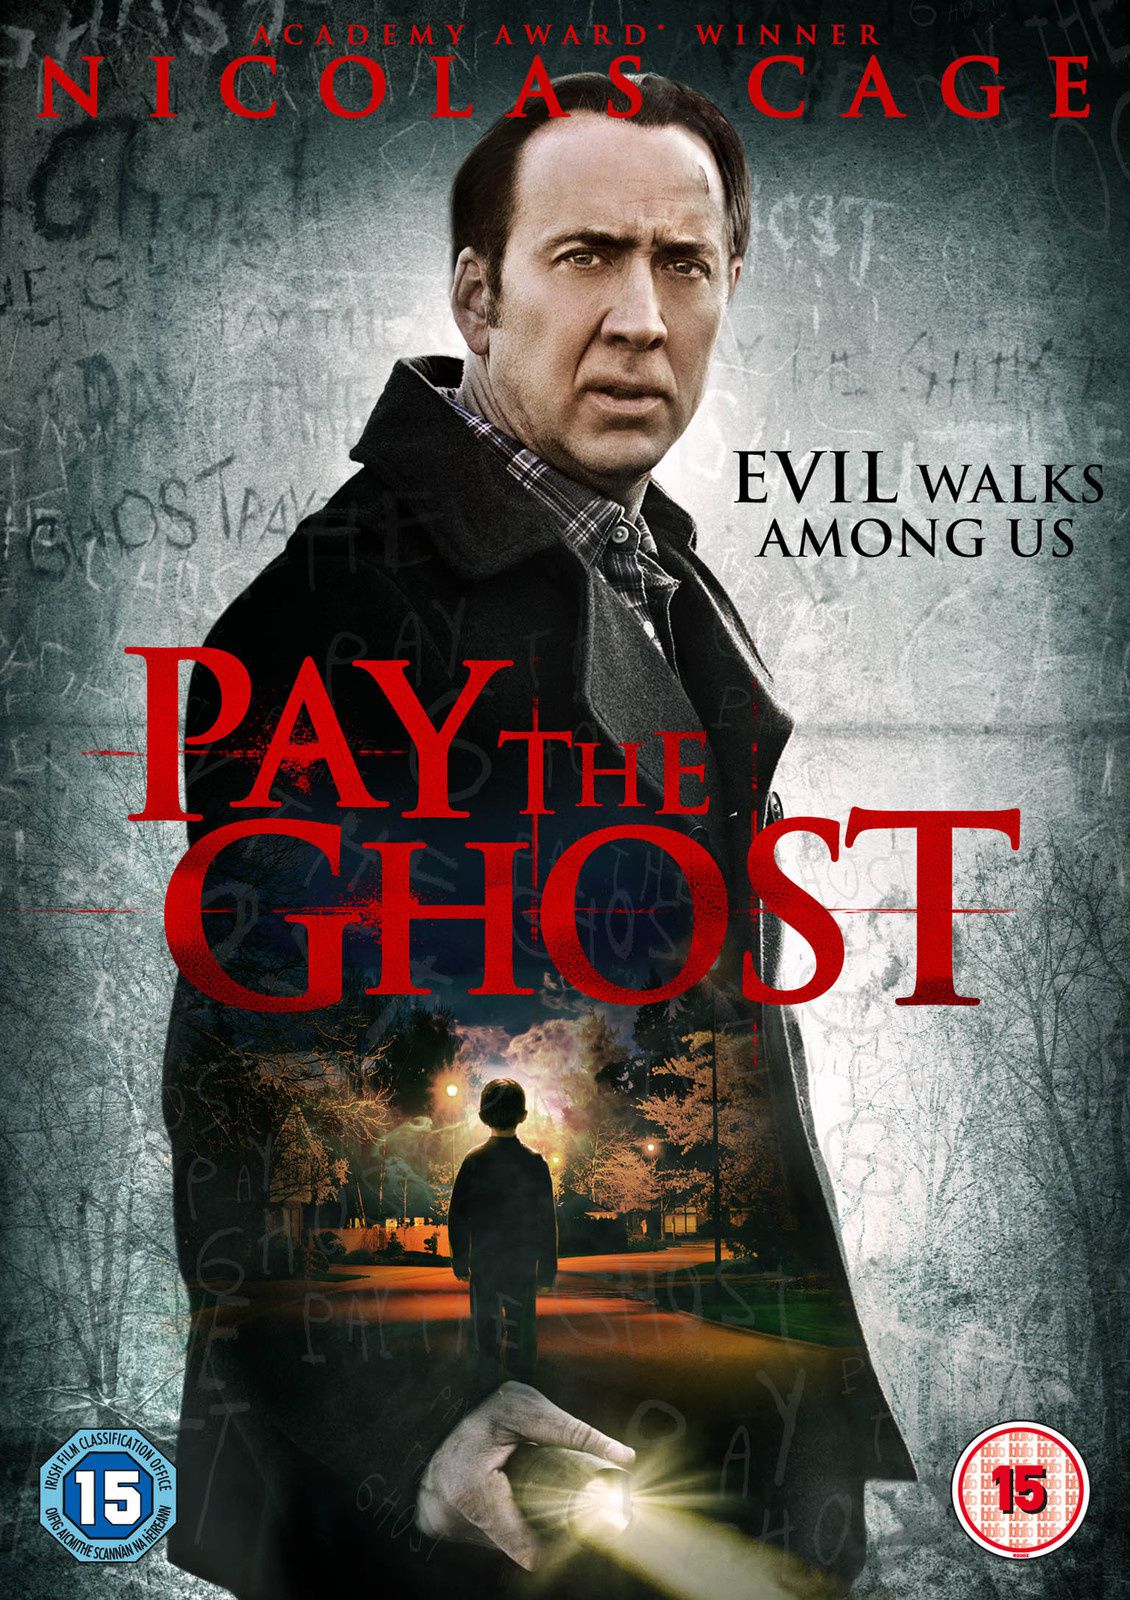 Pay the ghost (2015) (BANDE ANNONCE) avec Nicolas Cage, Sarah Wayne Callies, Veronica Ferres, Lyriq Bent, Erin Boyes